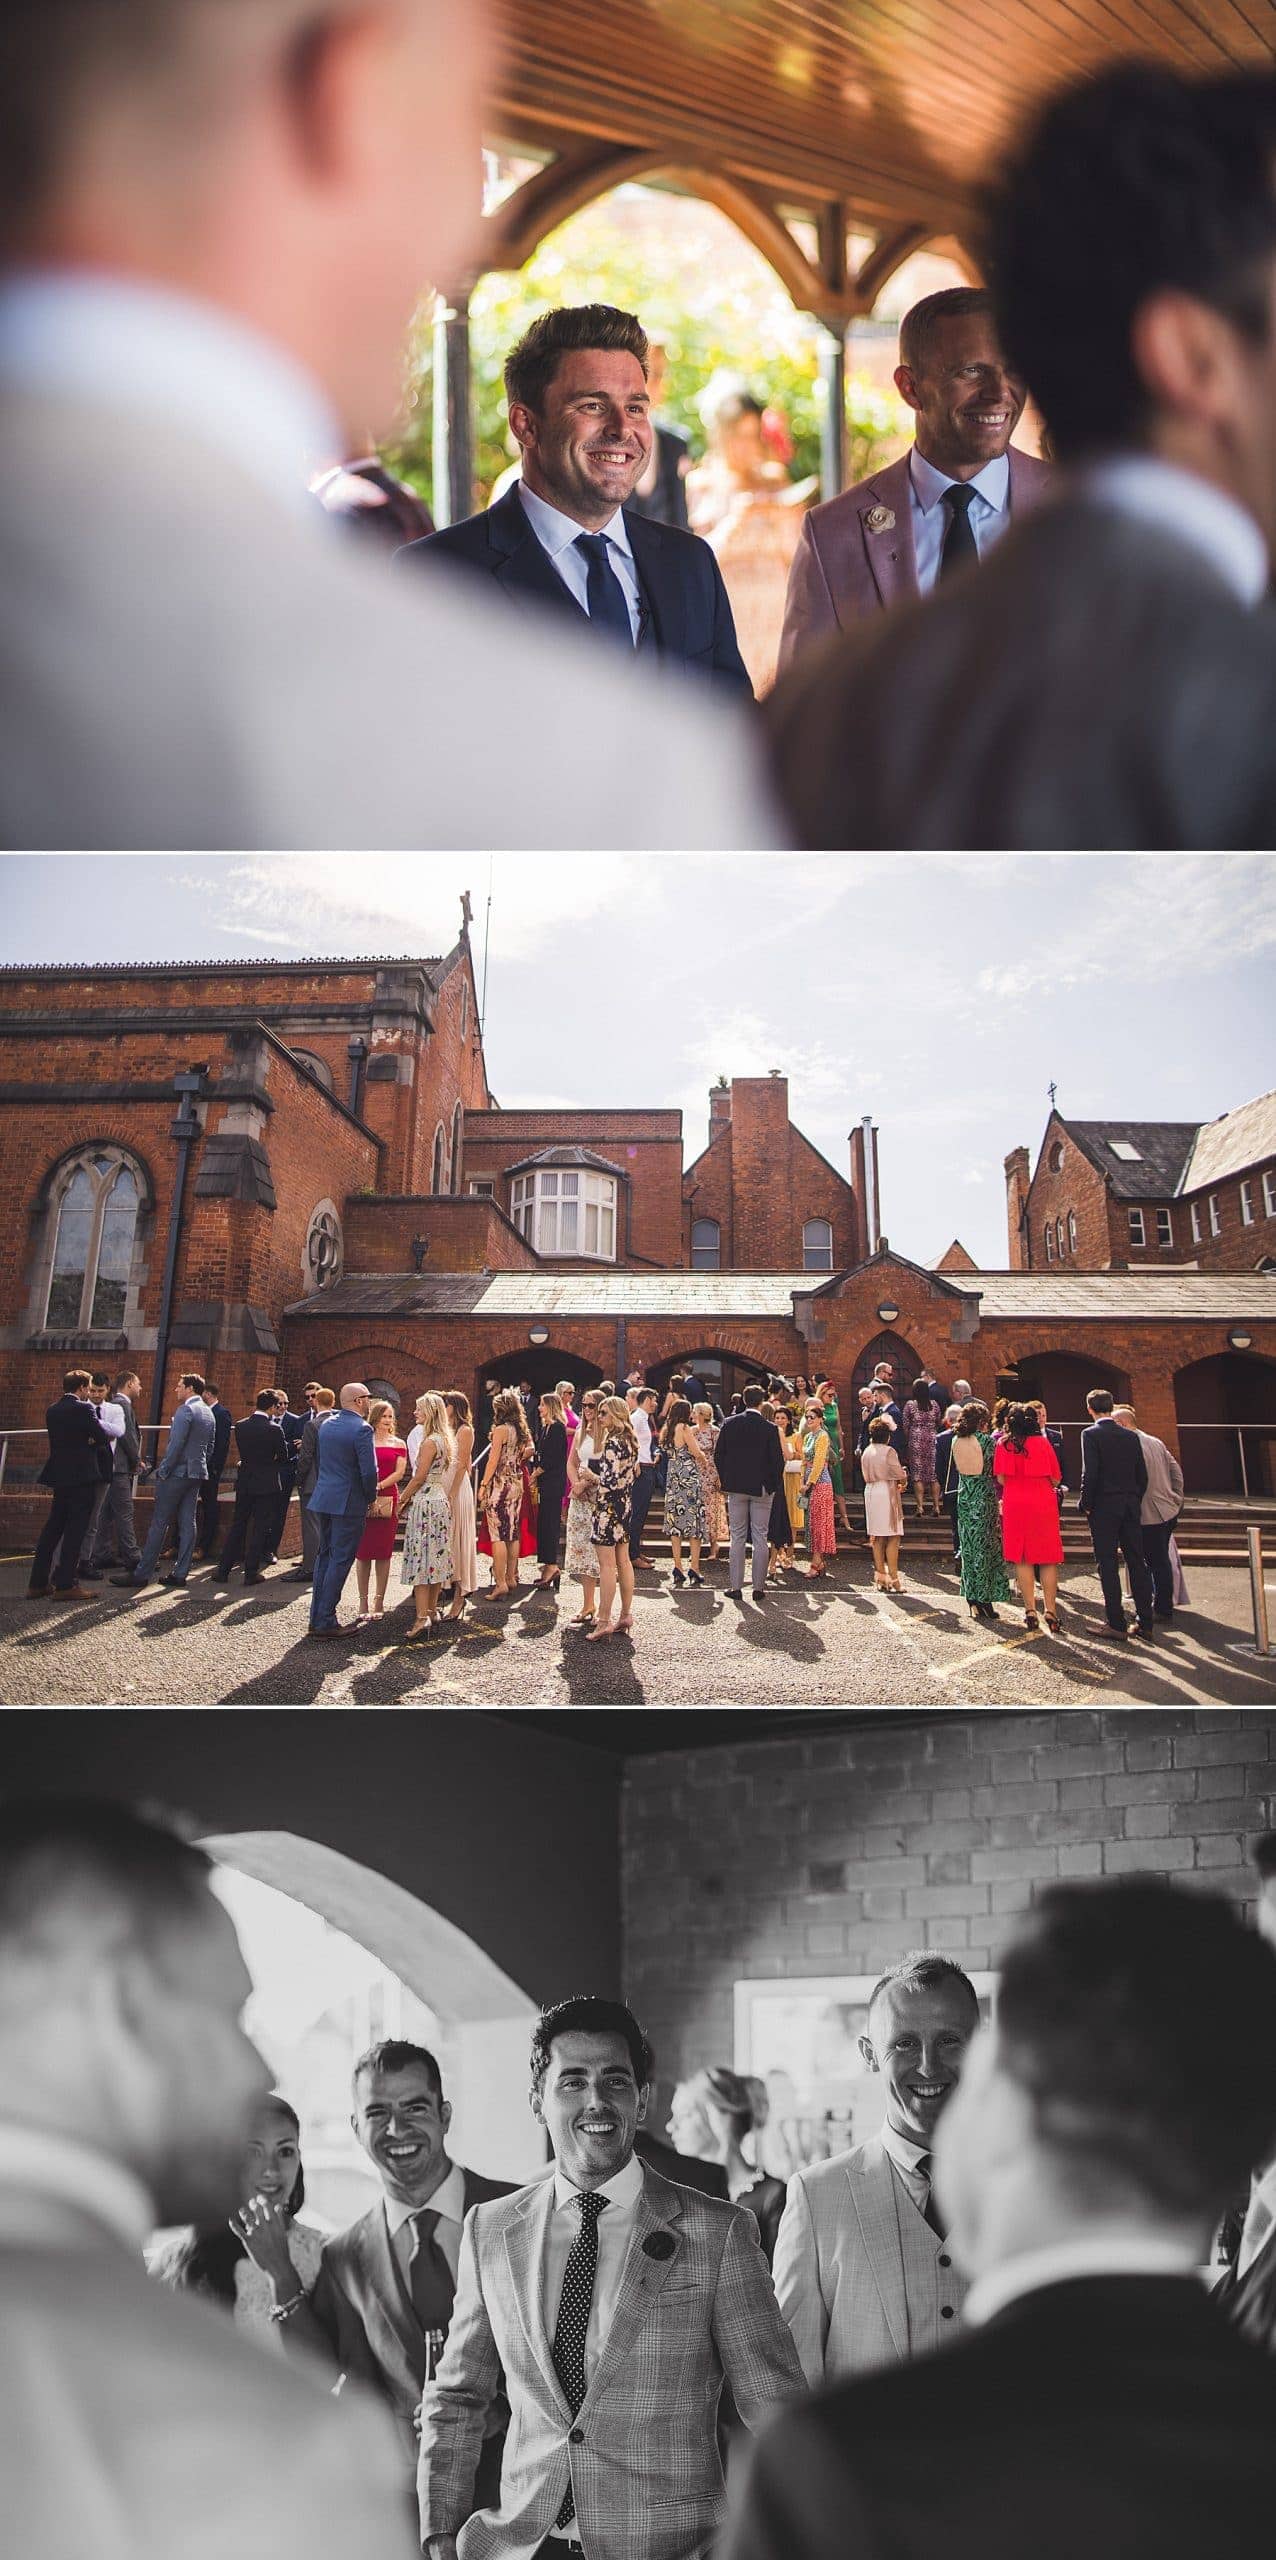 Belfast City Wedding Photographer,Titanic Hotel Wedding,Cathedral Quarter,Duke of York,Navyblur Photography,